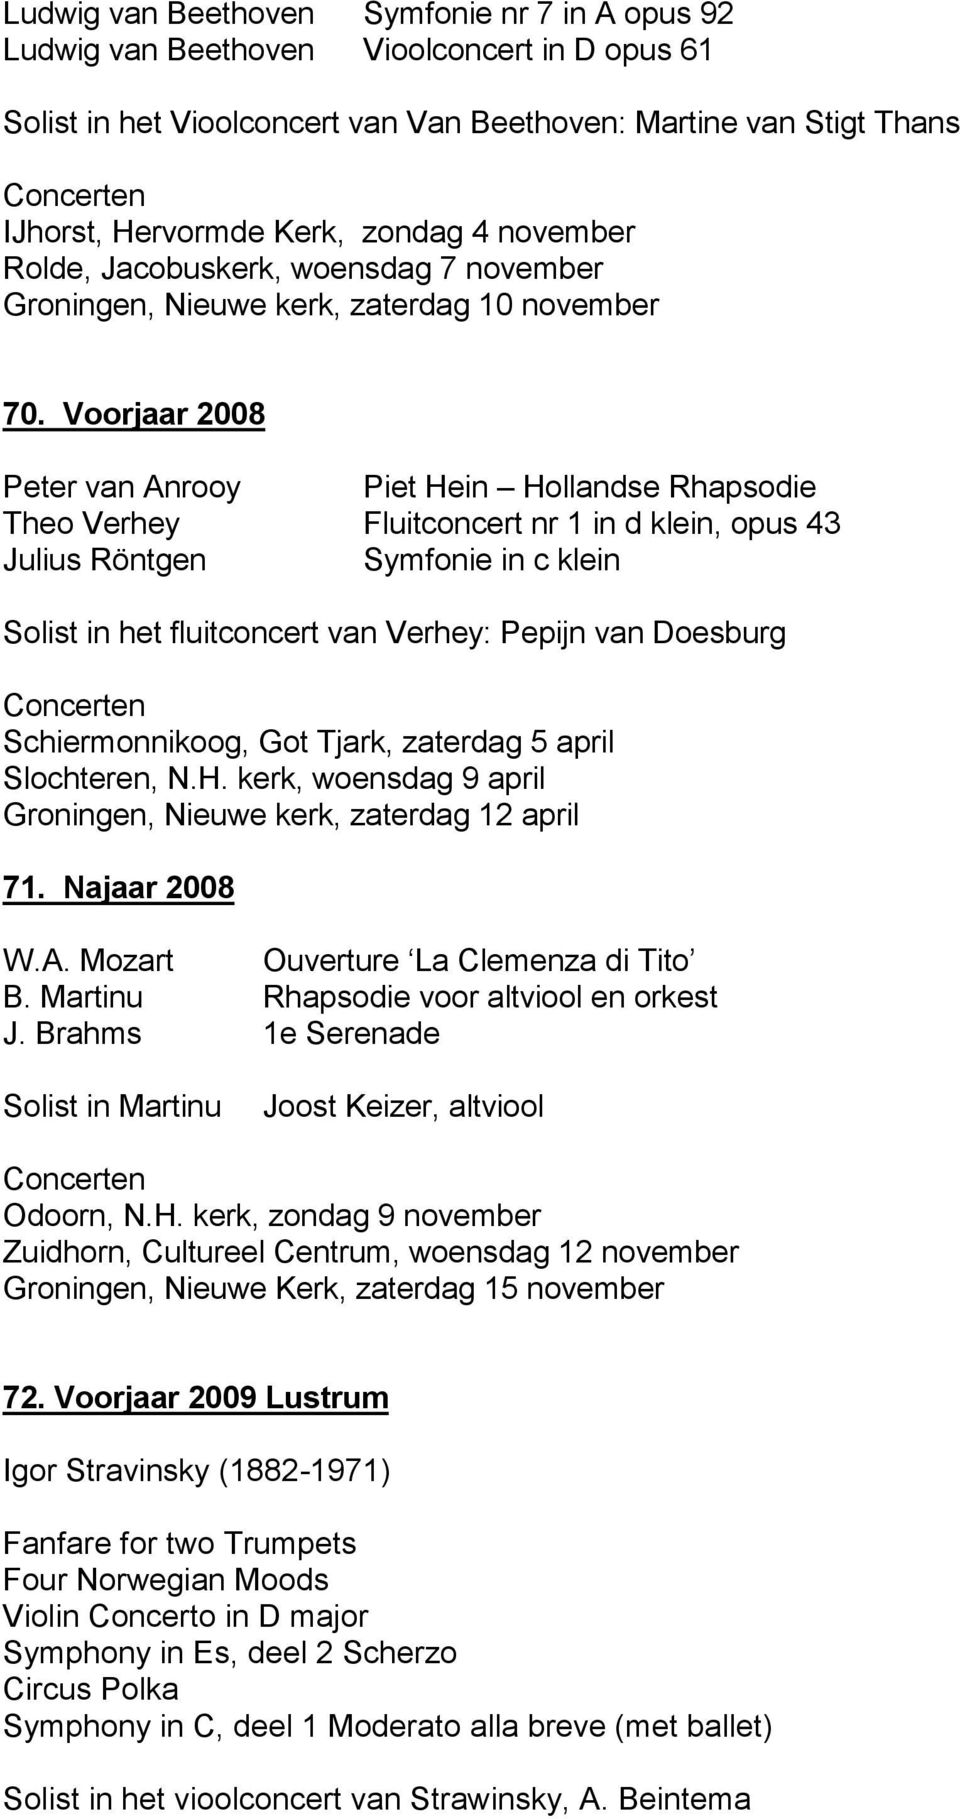 Voorjaar 2008 Peter van Anrooy Piet Hein Hollandse Rhapsodie Theo Verhey Fluitconcert nr 1 in d klein, opus 43 Julius Röntgen Symfonie in c klein Solist in het fluitconcert van Verhey: Pepijn van